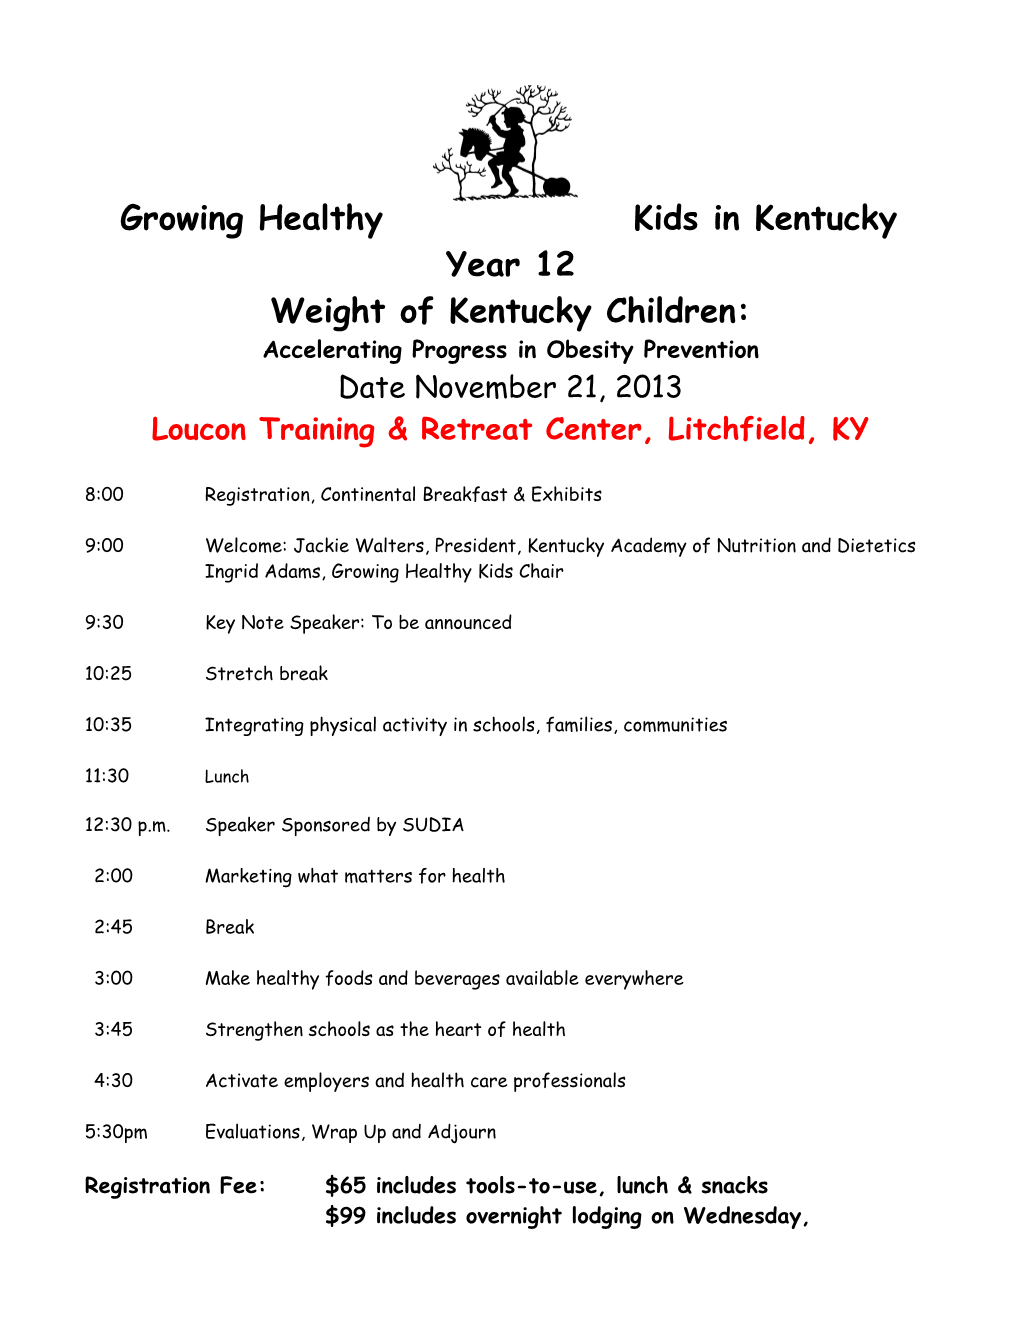 Growing Healthy Kids in Kentucky Year 12